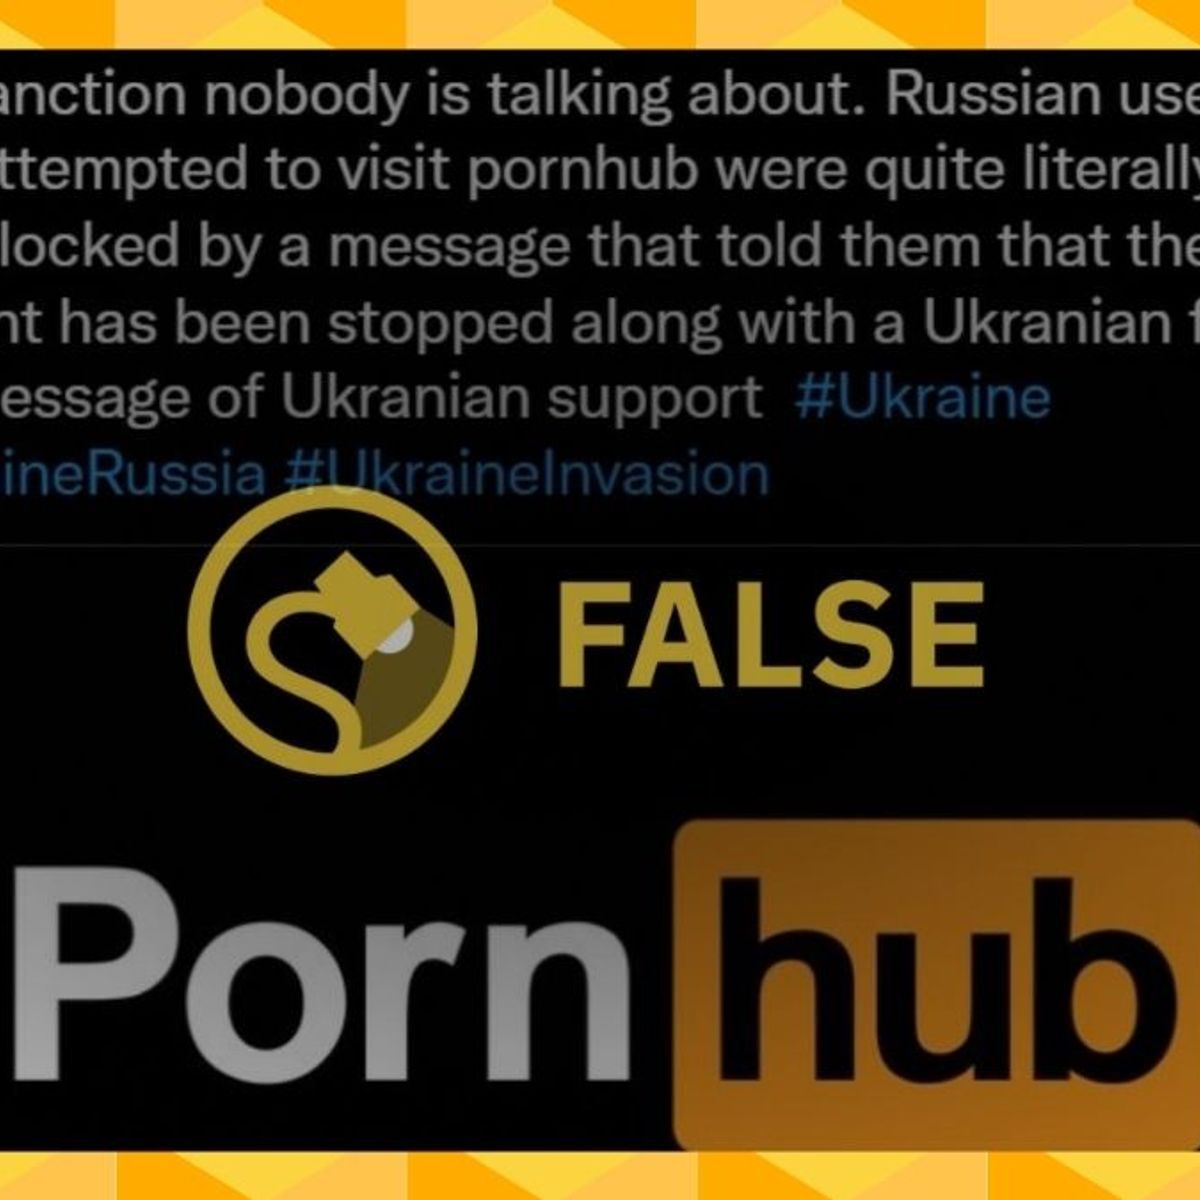 Banned Porn Vk - Did Pornhub Block Russian Users? | Snopes.com